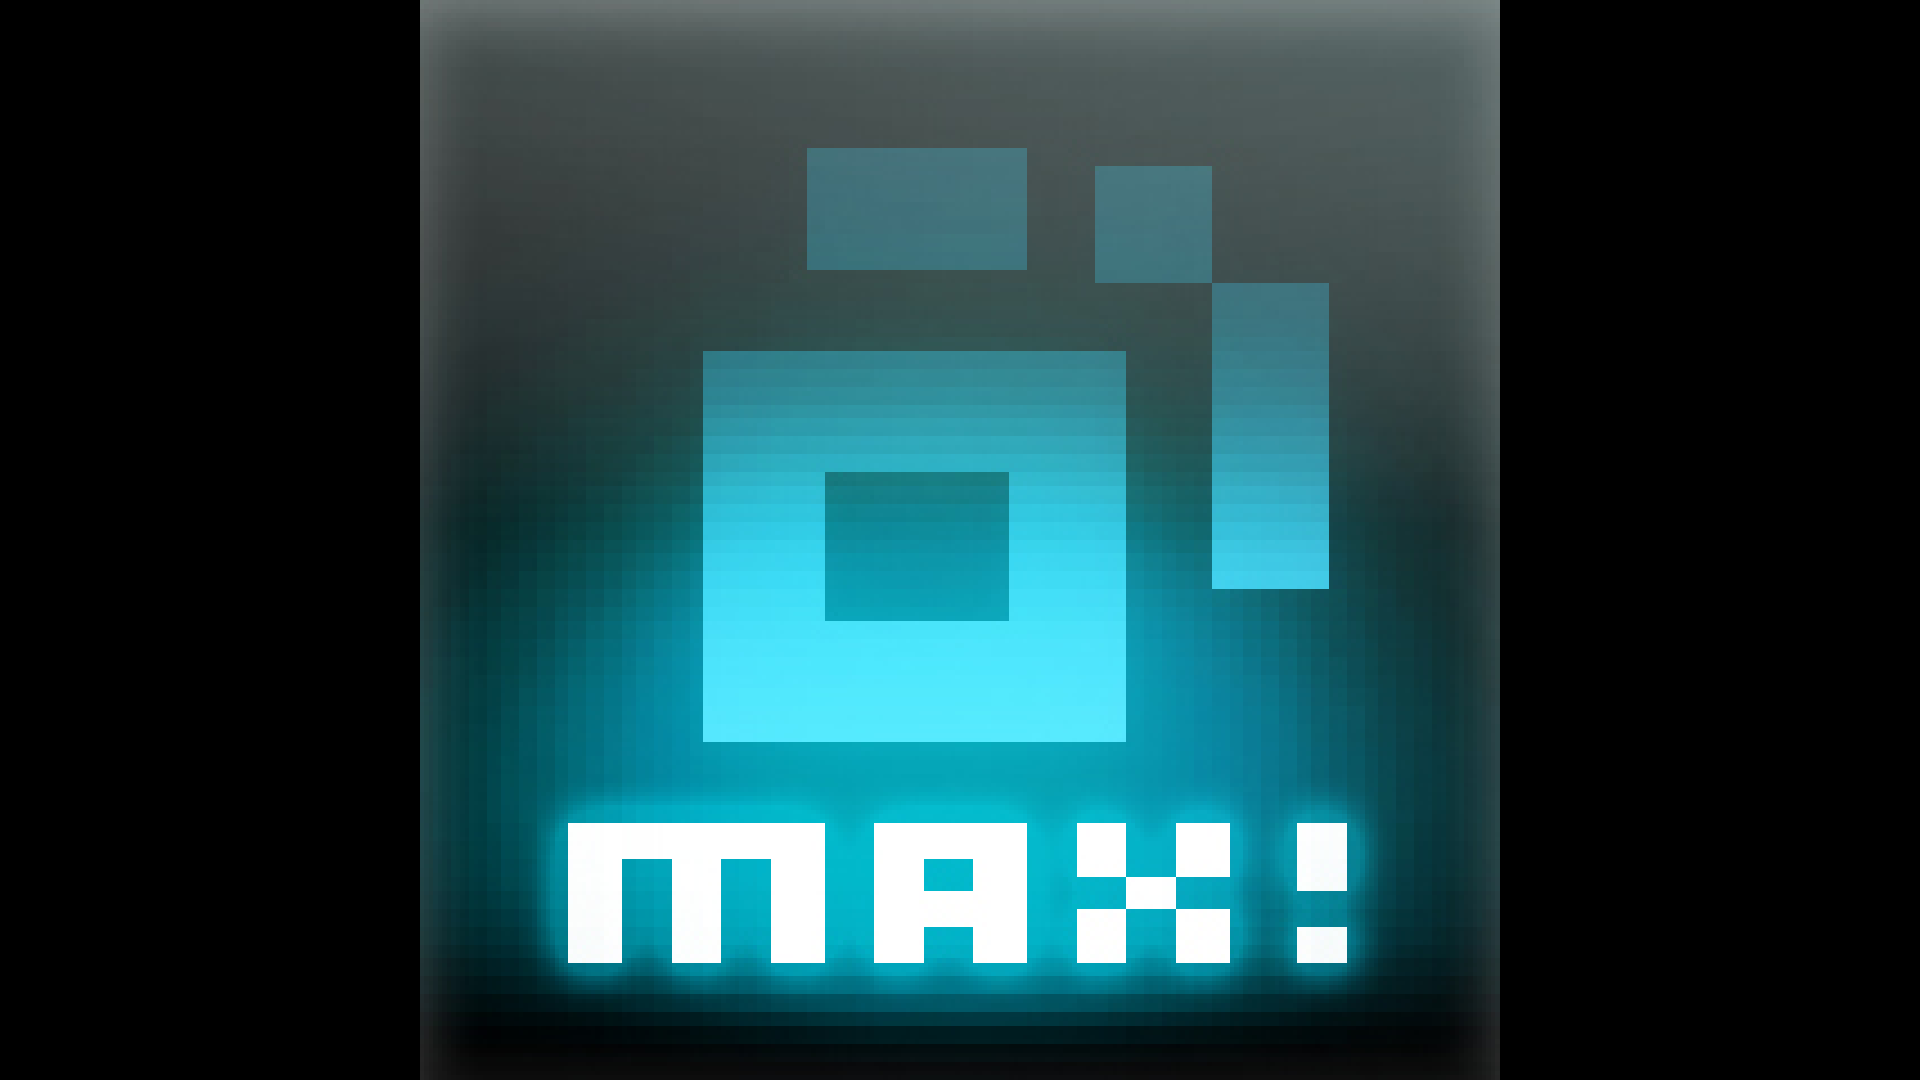 Icon for Max Grenade Upgrades